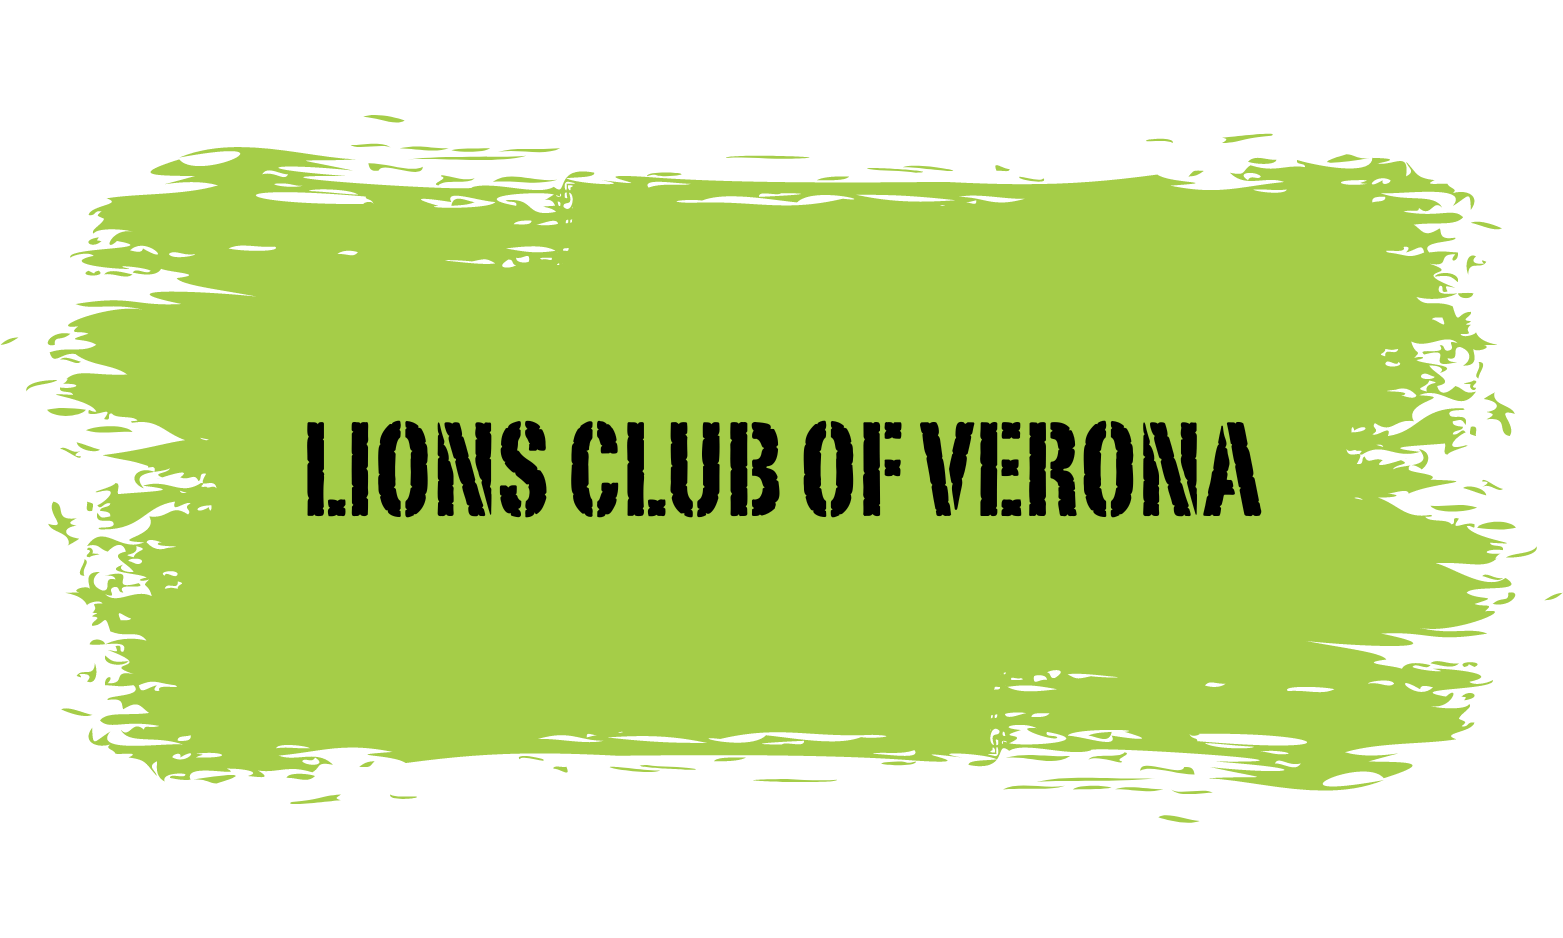 Lions club of Verona